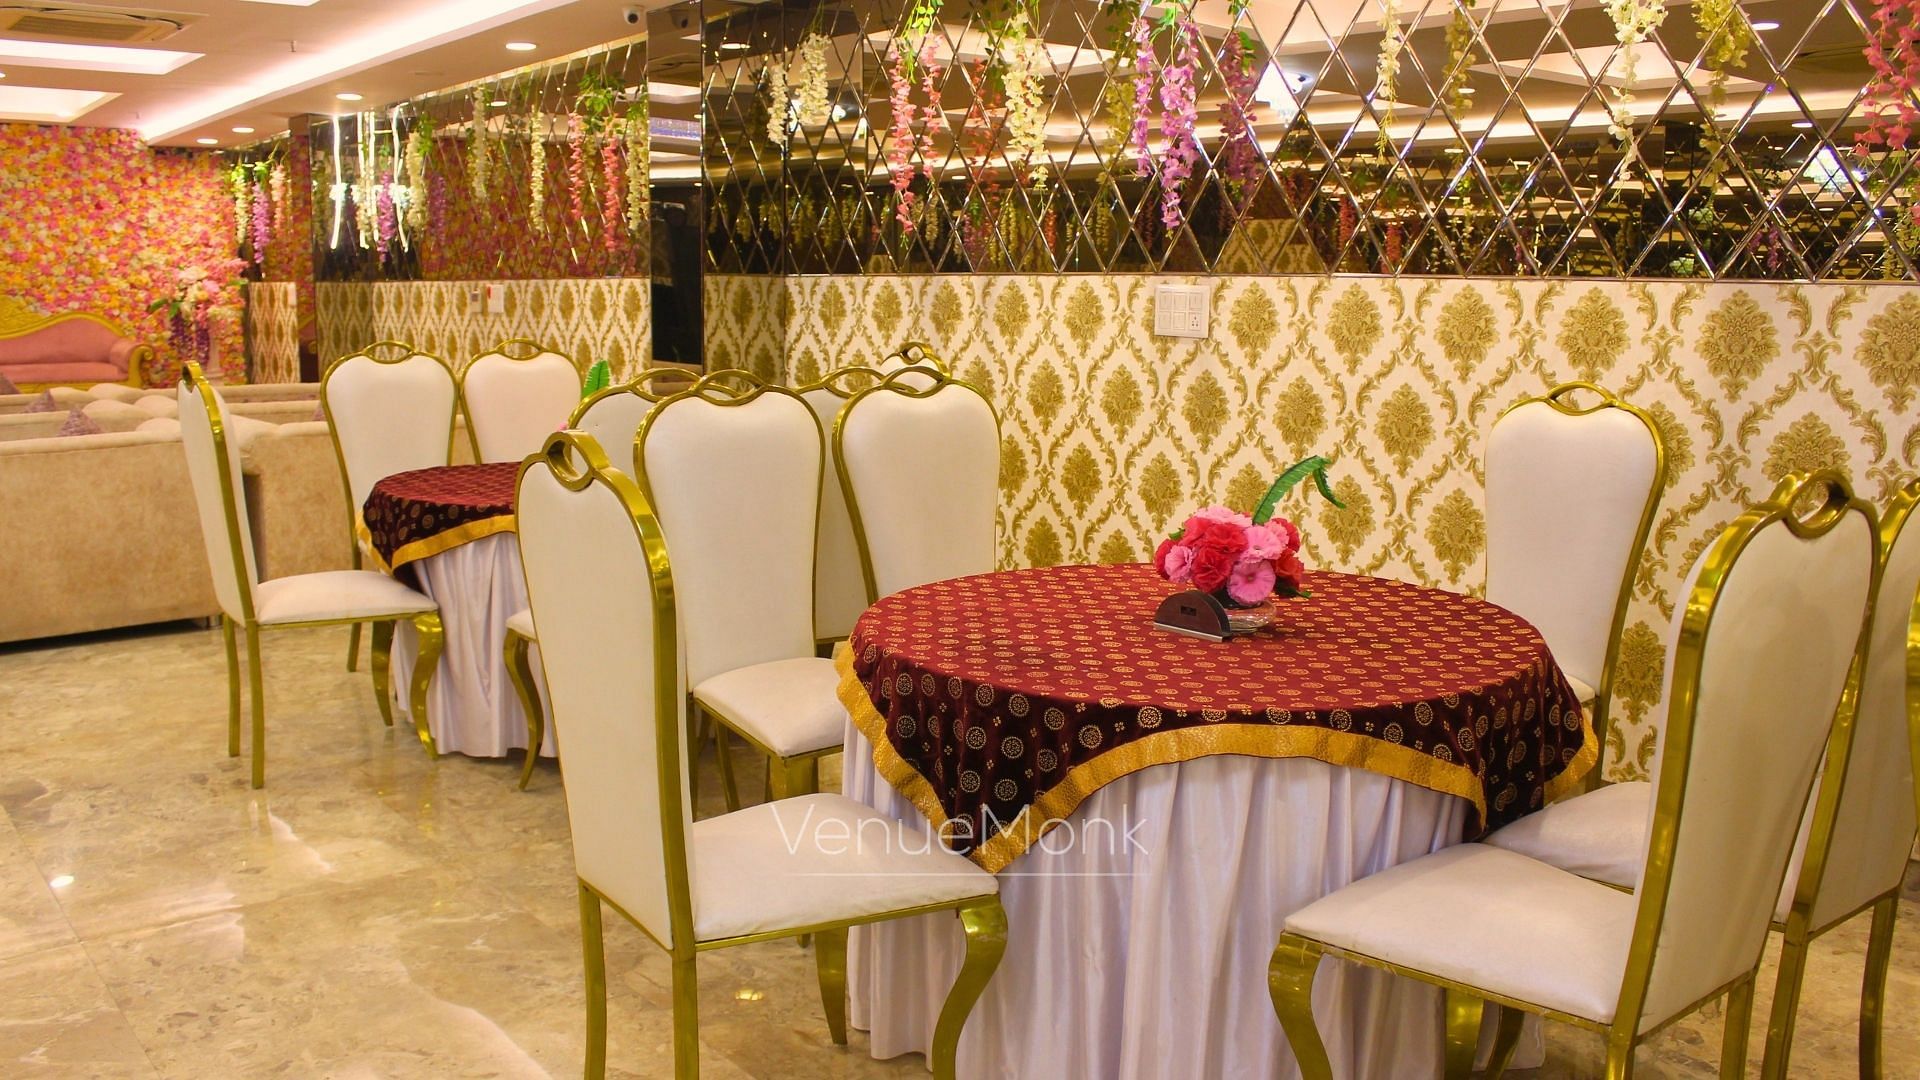 Mithila Banquet in Sector 66, Noida